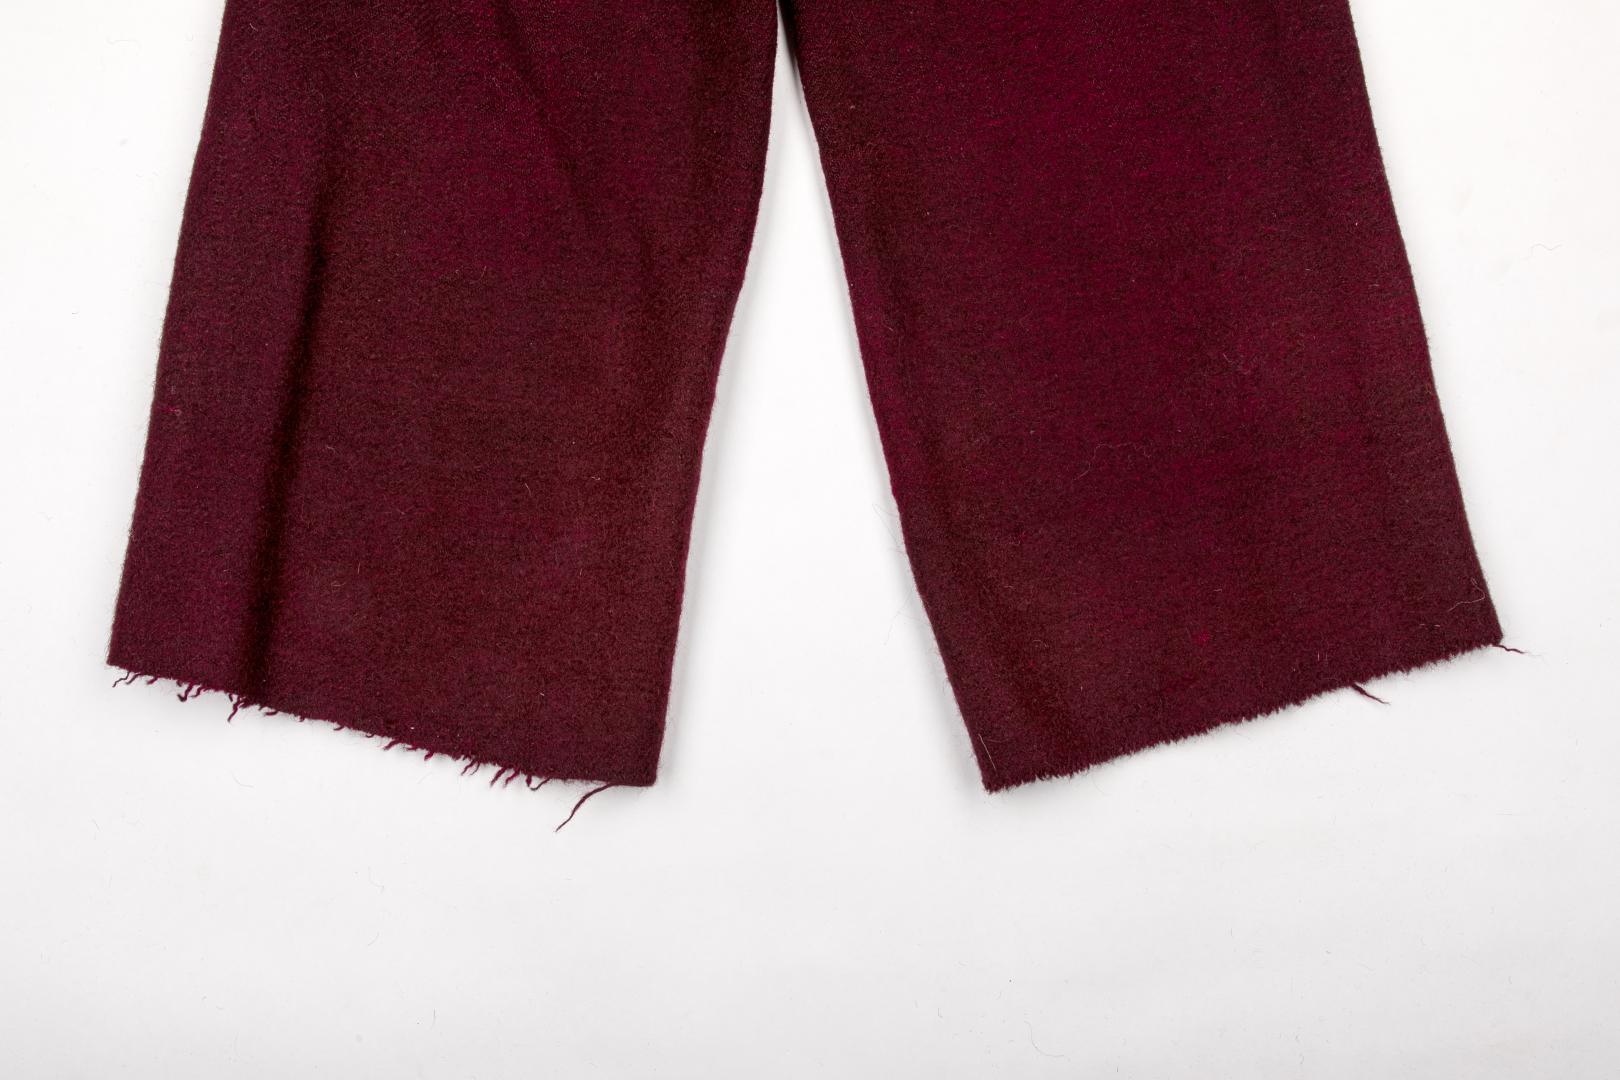 Pants made of burgundy cloth